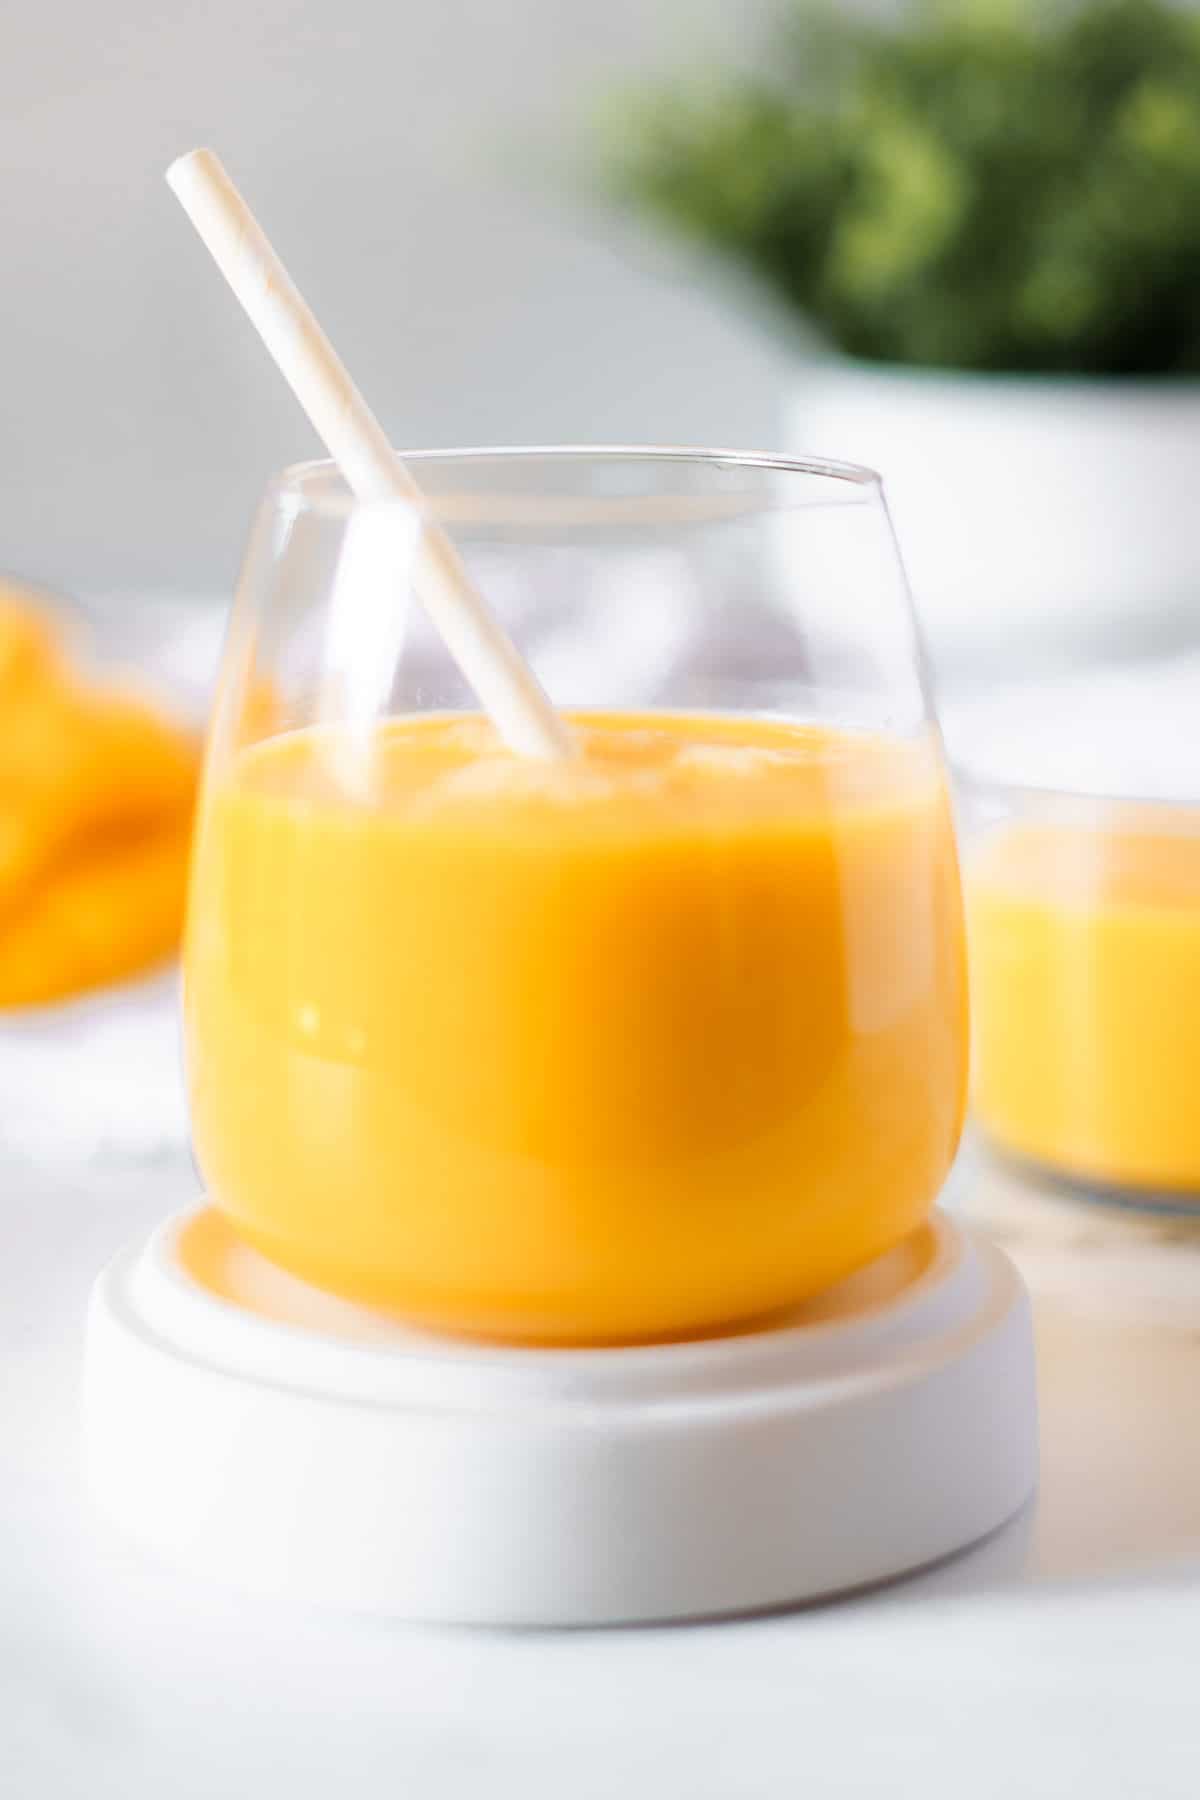 mango nectar in a glass. 